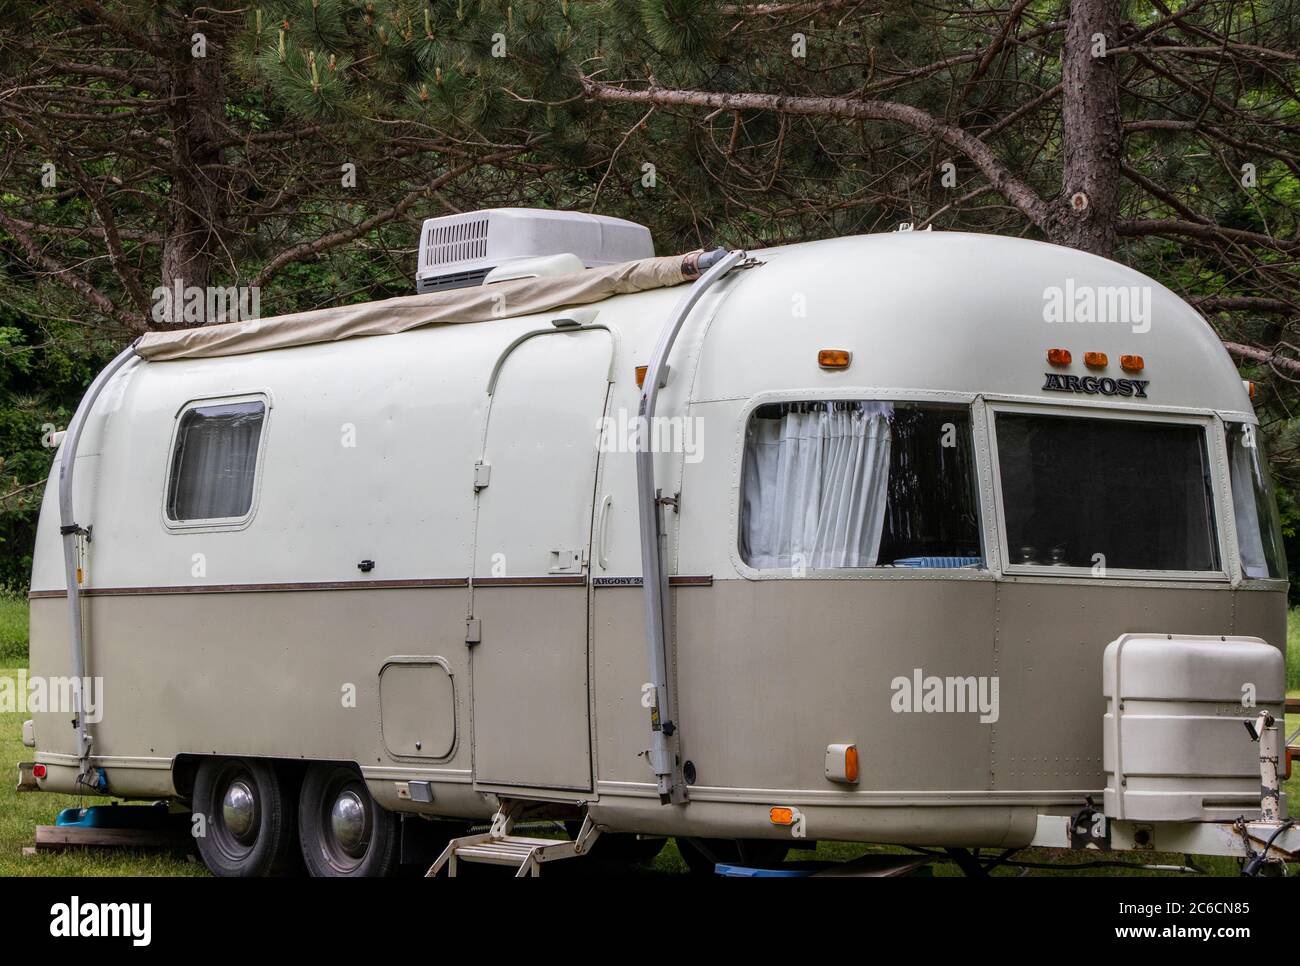 13 giugno 2020 - Frelghsburg, Québec, Canada: Argosy Airstream Caravan dipinto anni '70 linea su un campeggio durante le vacanze made in USA Foto Stock